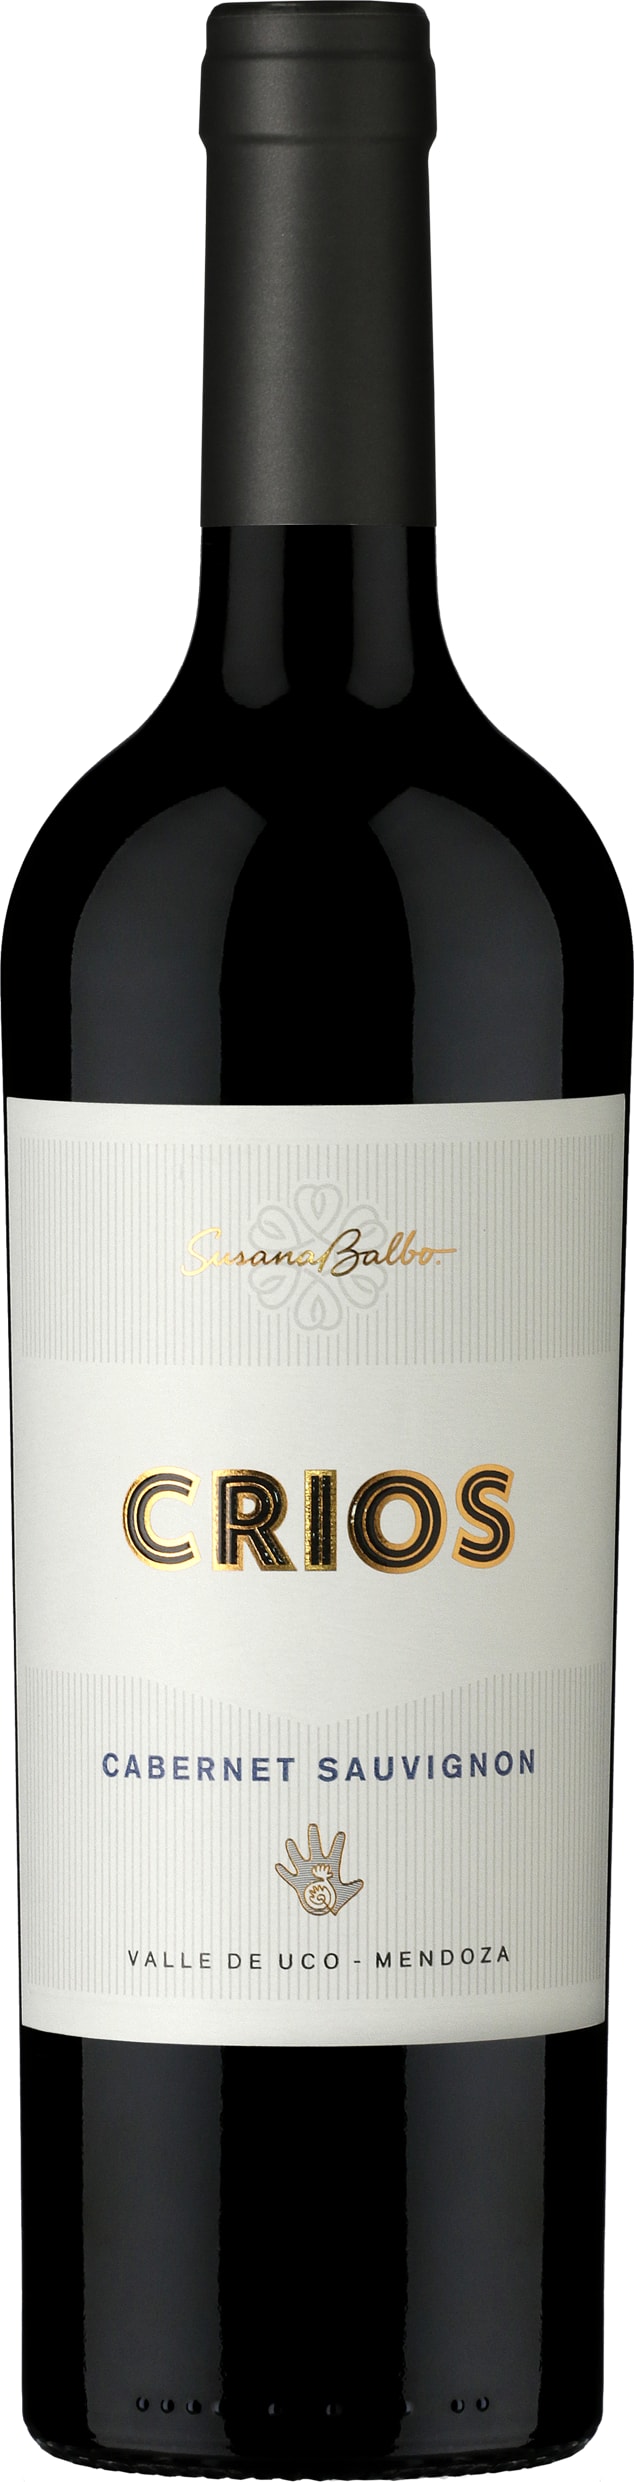 Susana Balbo Crios Cabernet Sauvignon 2021 75cl - Buy Susana Balbo Wines from GREAT WINES DIRECT wine shop